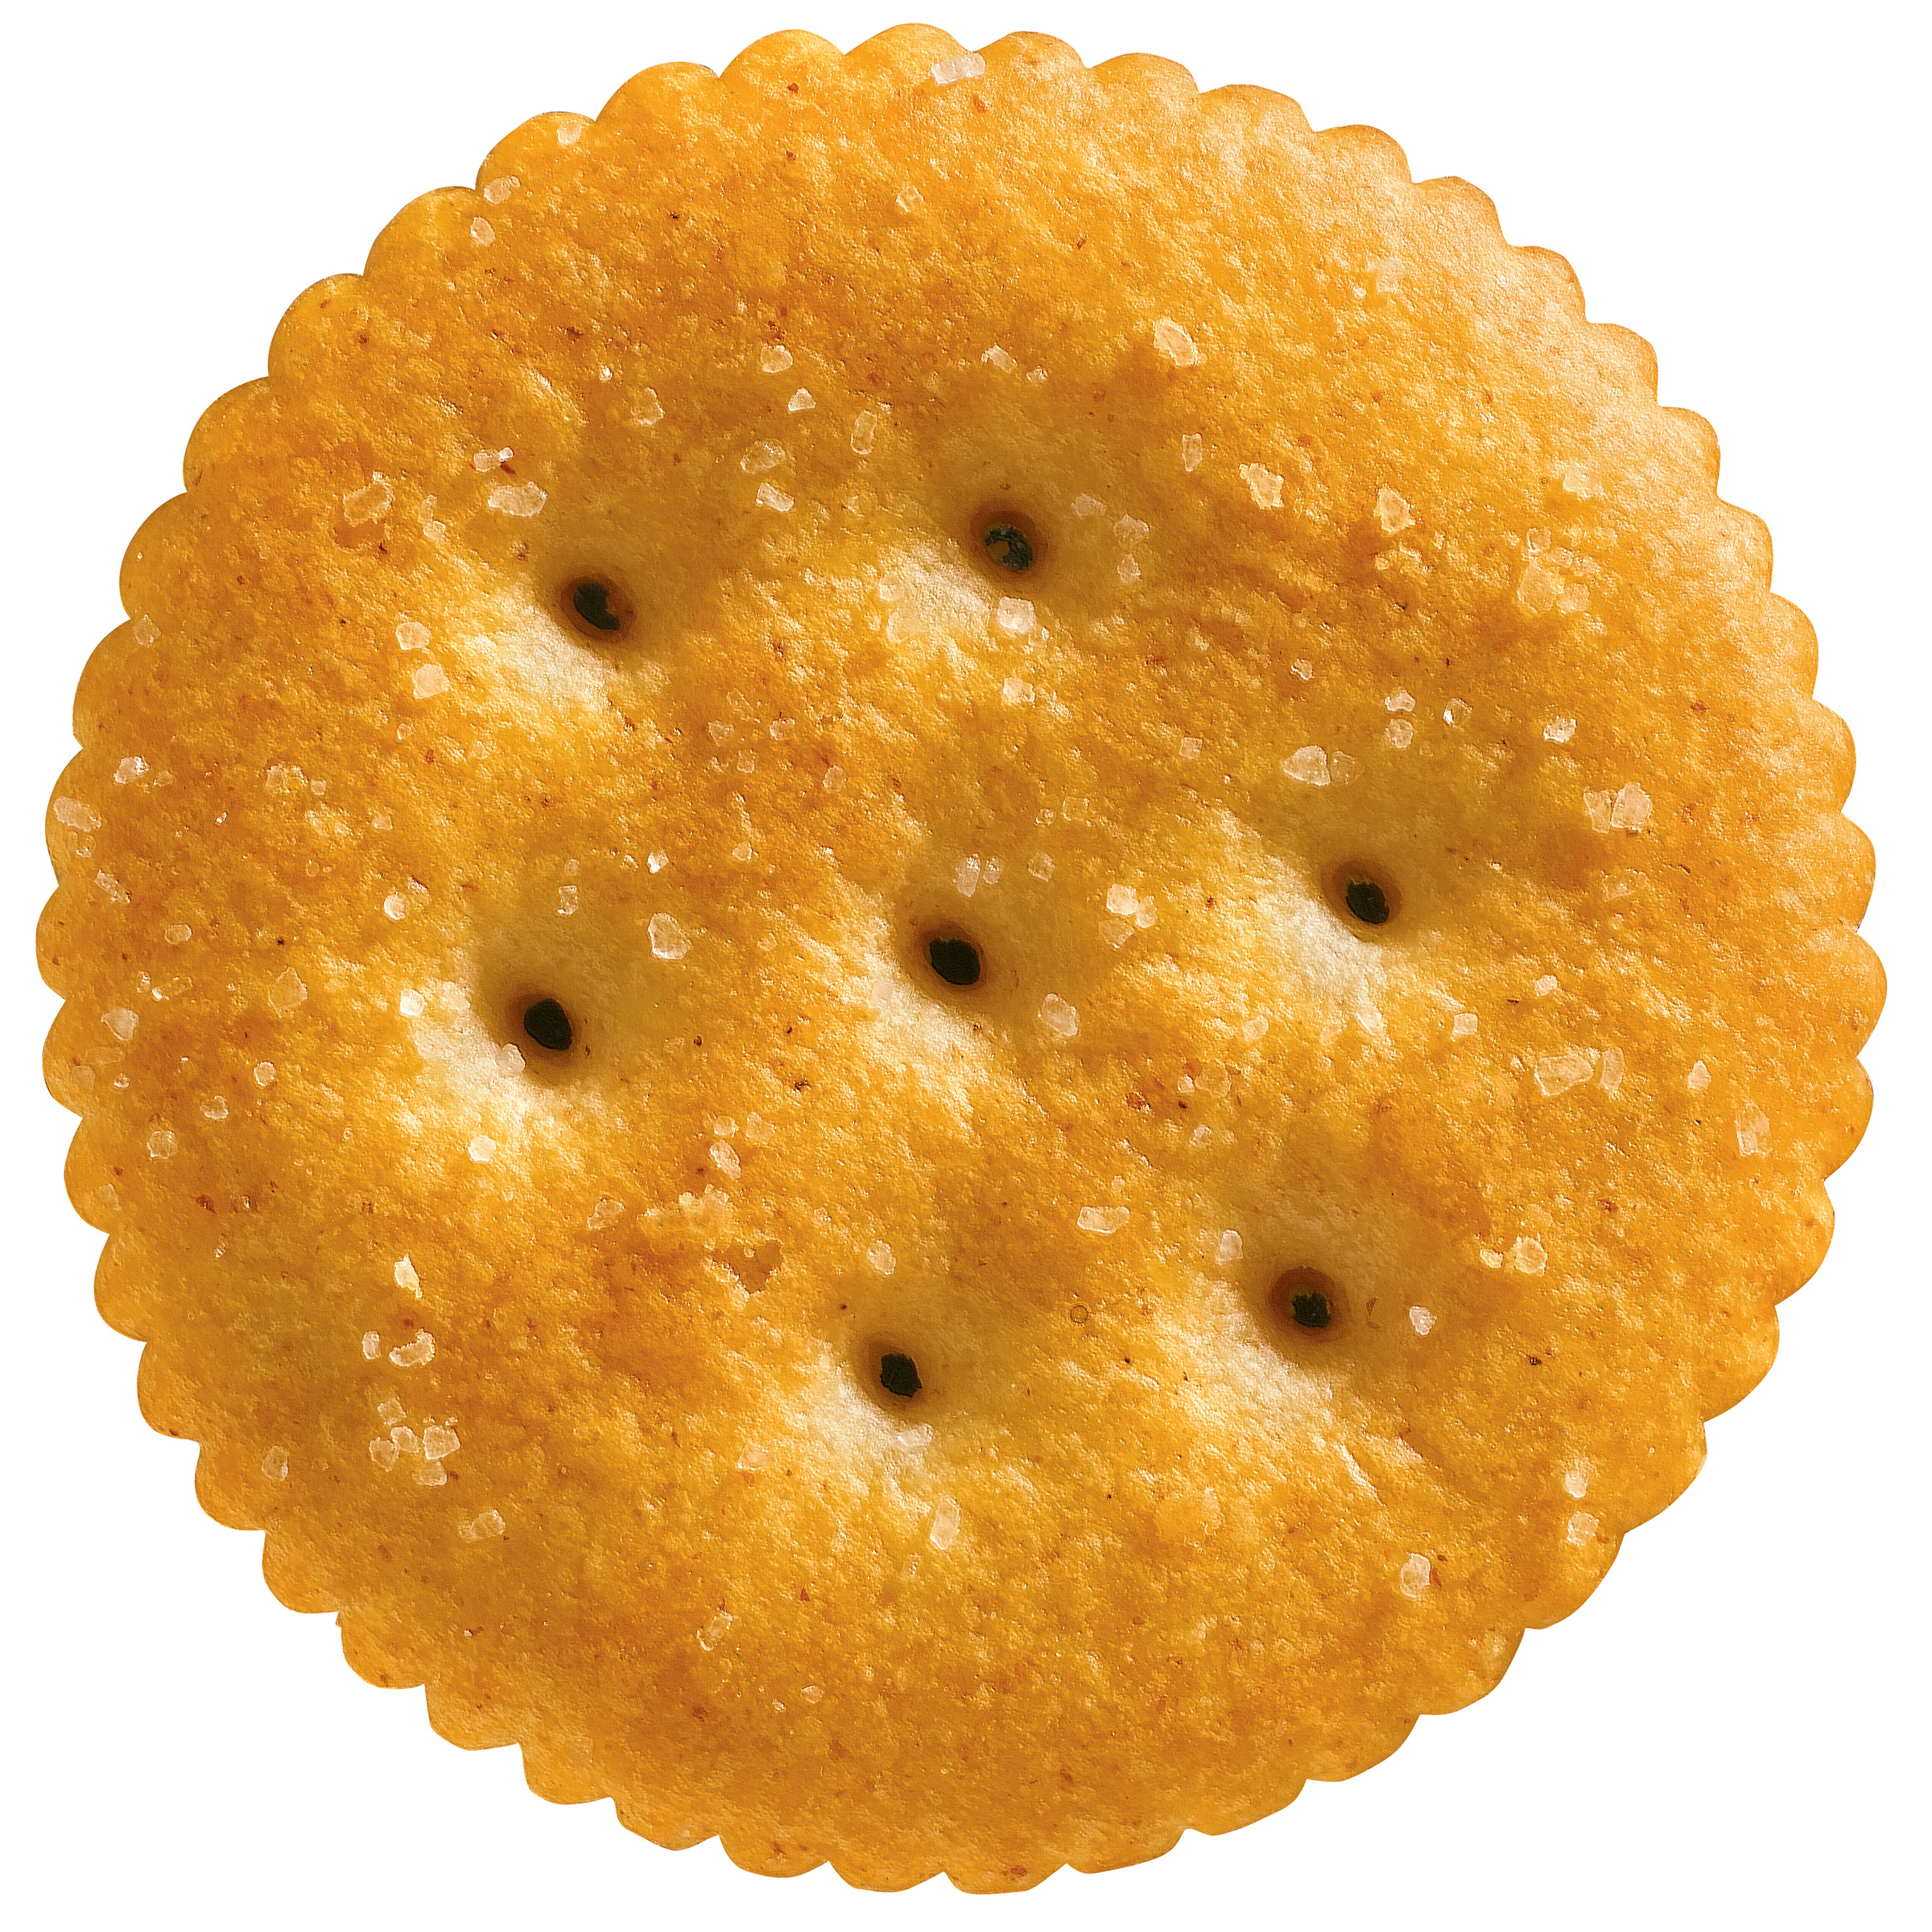 RITZ Original Crackers, 10.3 oz - image 4 of 13